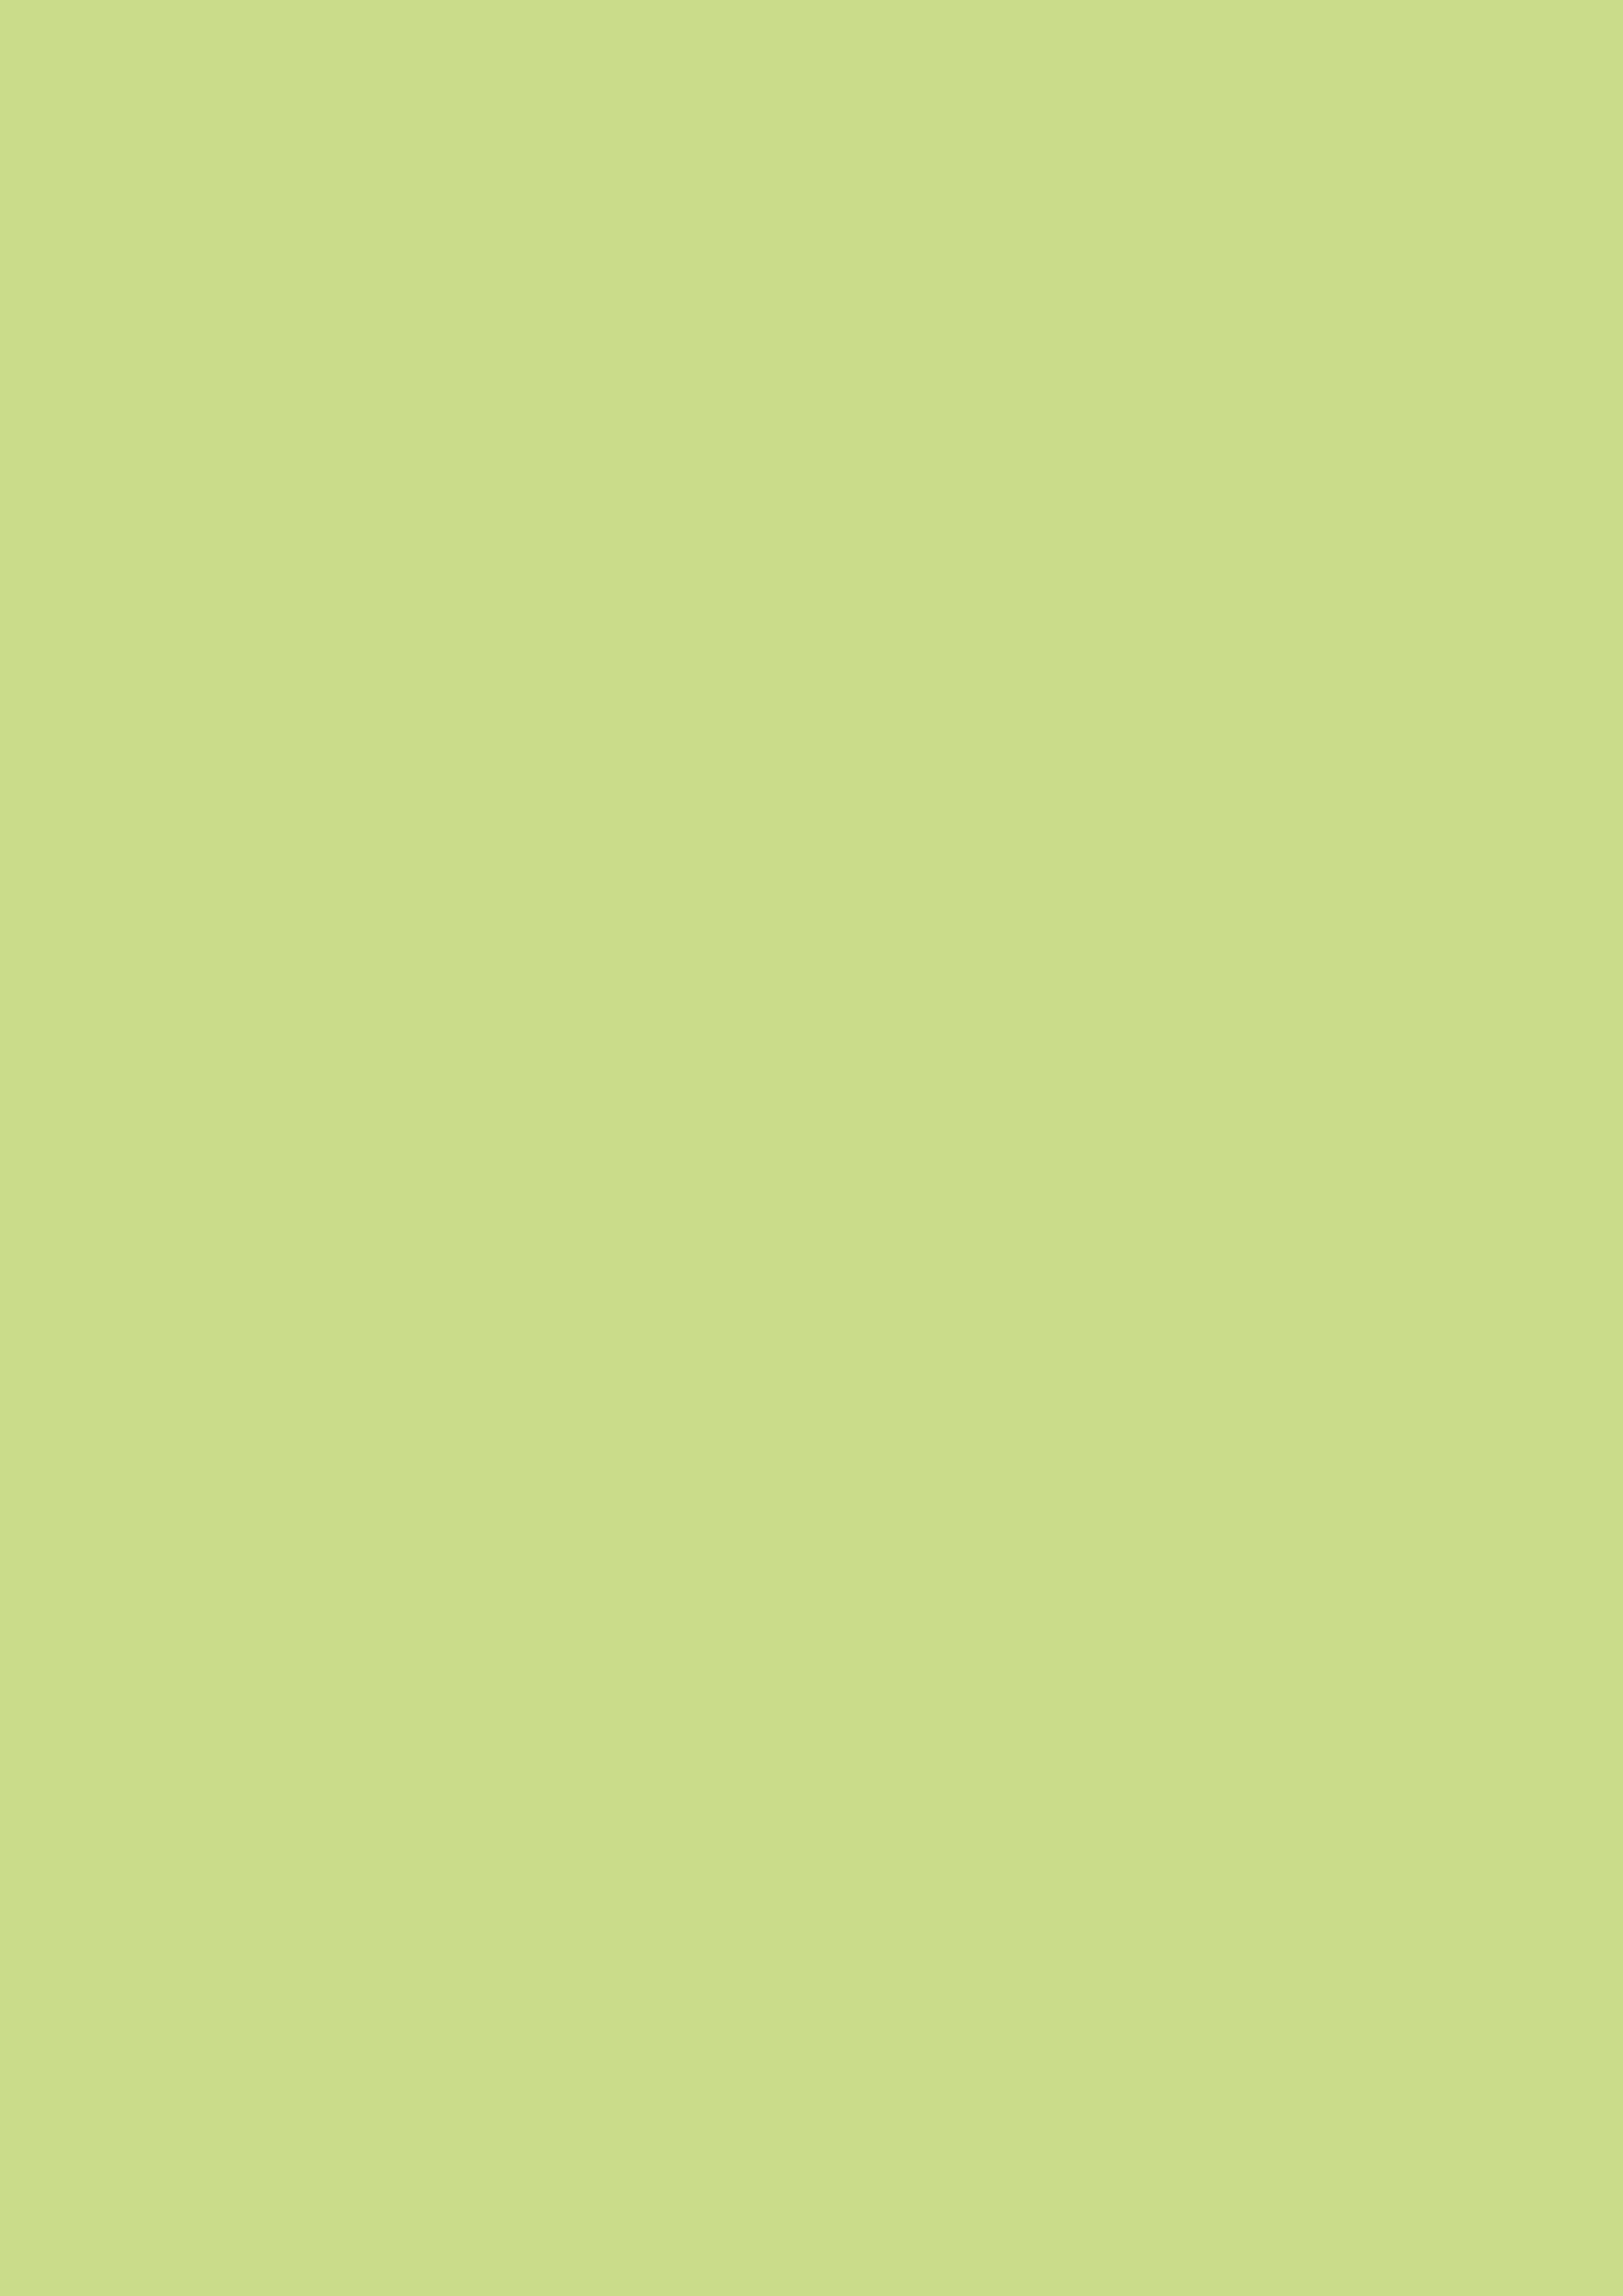 2480x3508 Medium Spring Bud Solid Color Background